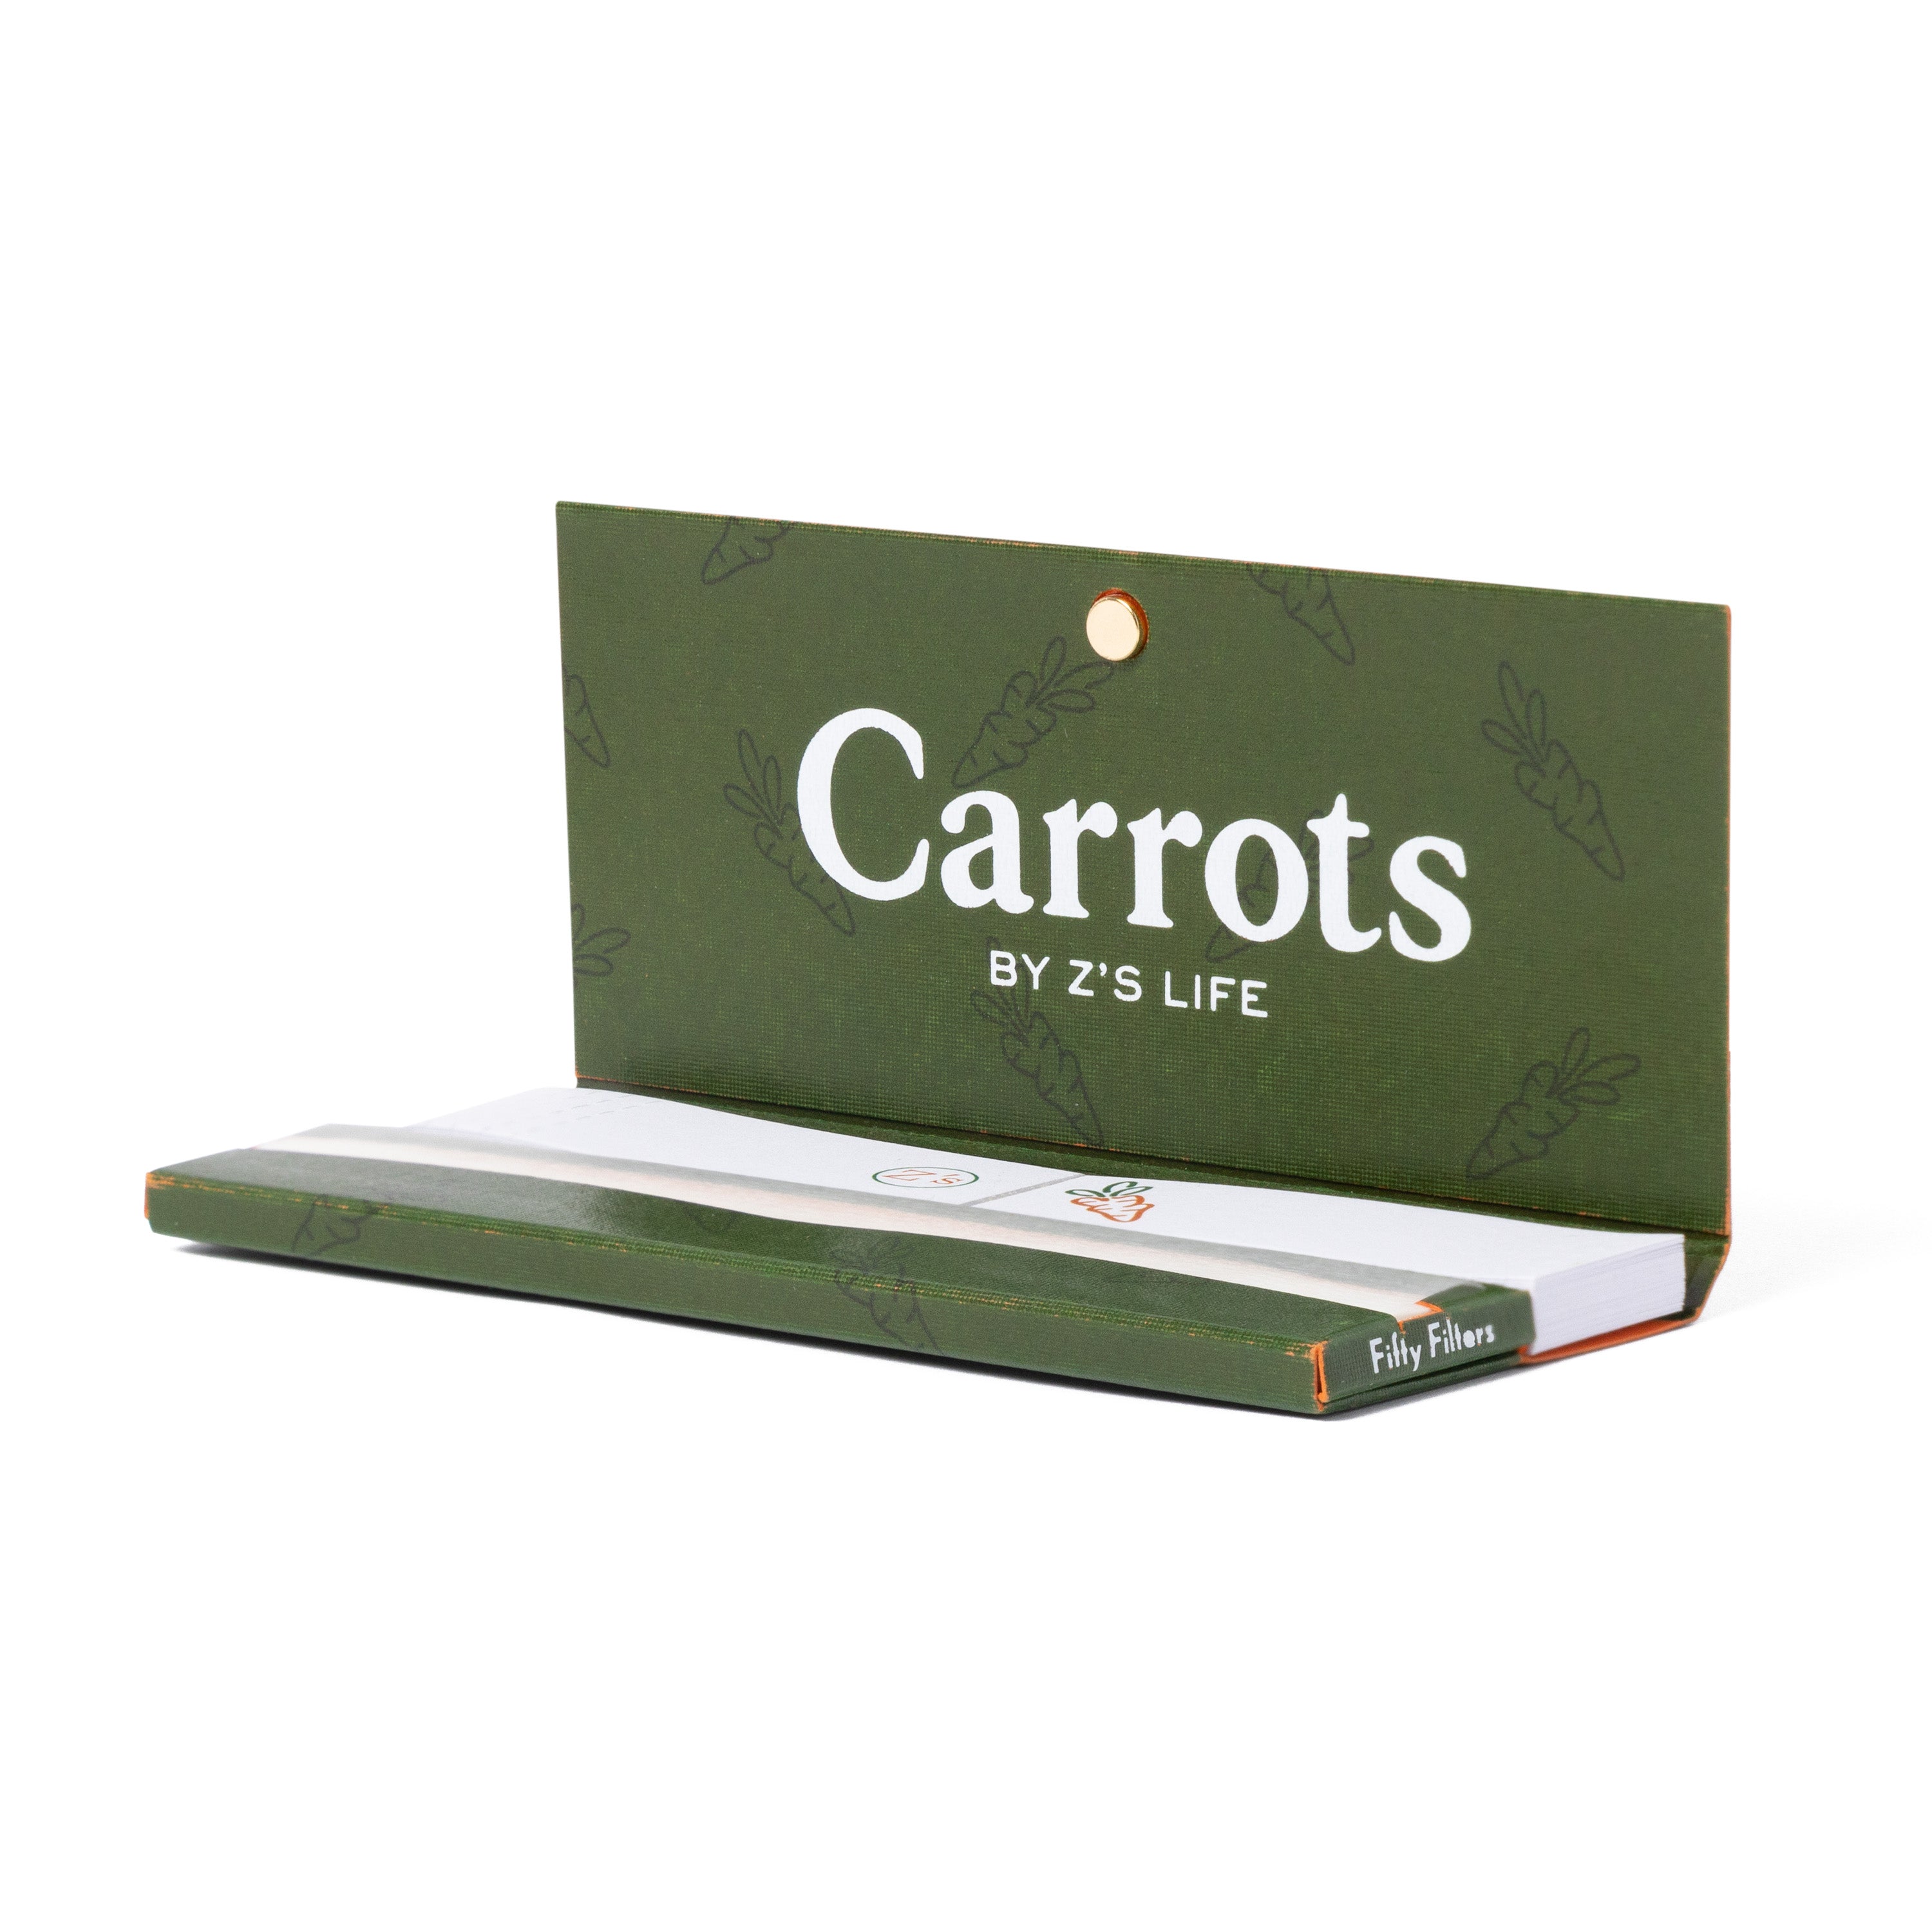 CARROTS VINTAGE MESSENGER BAG, Carrots x Manhattan Portage